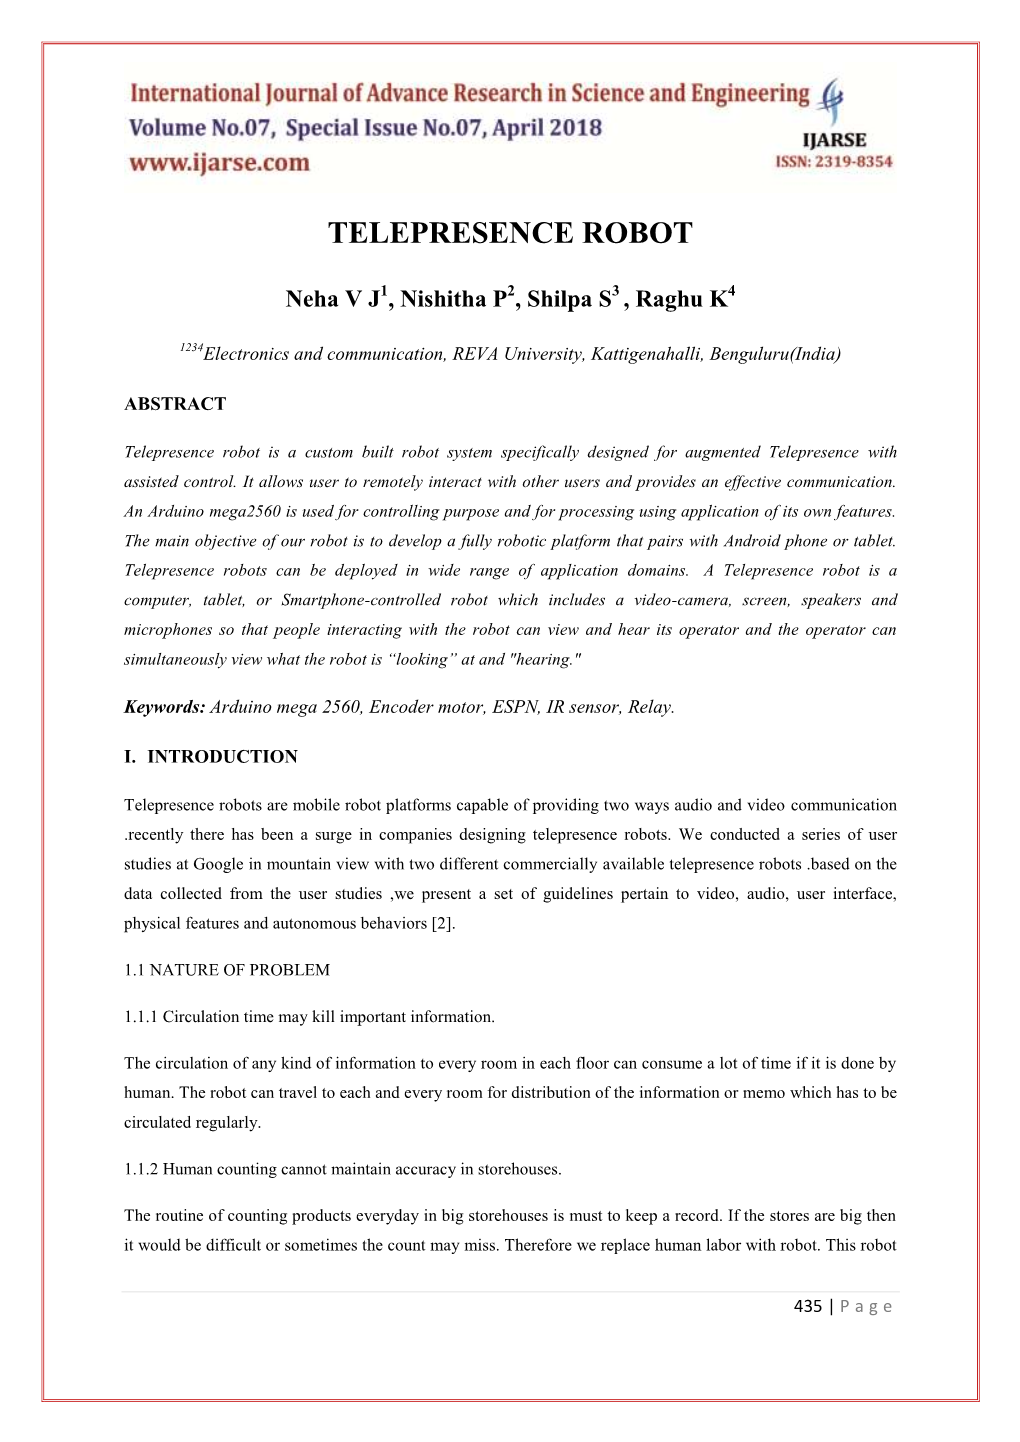 Telepresence Robot